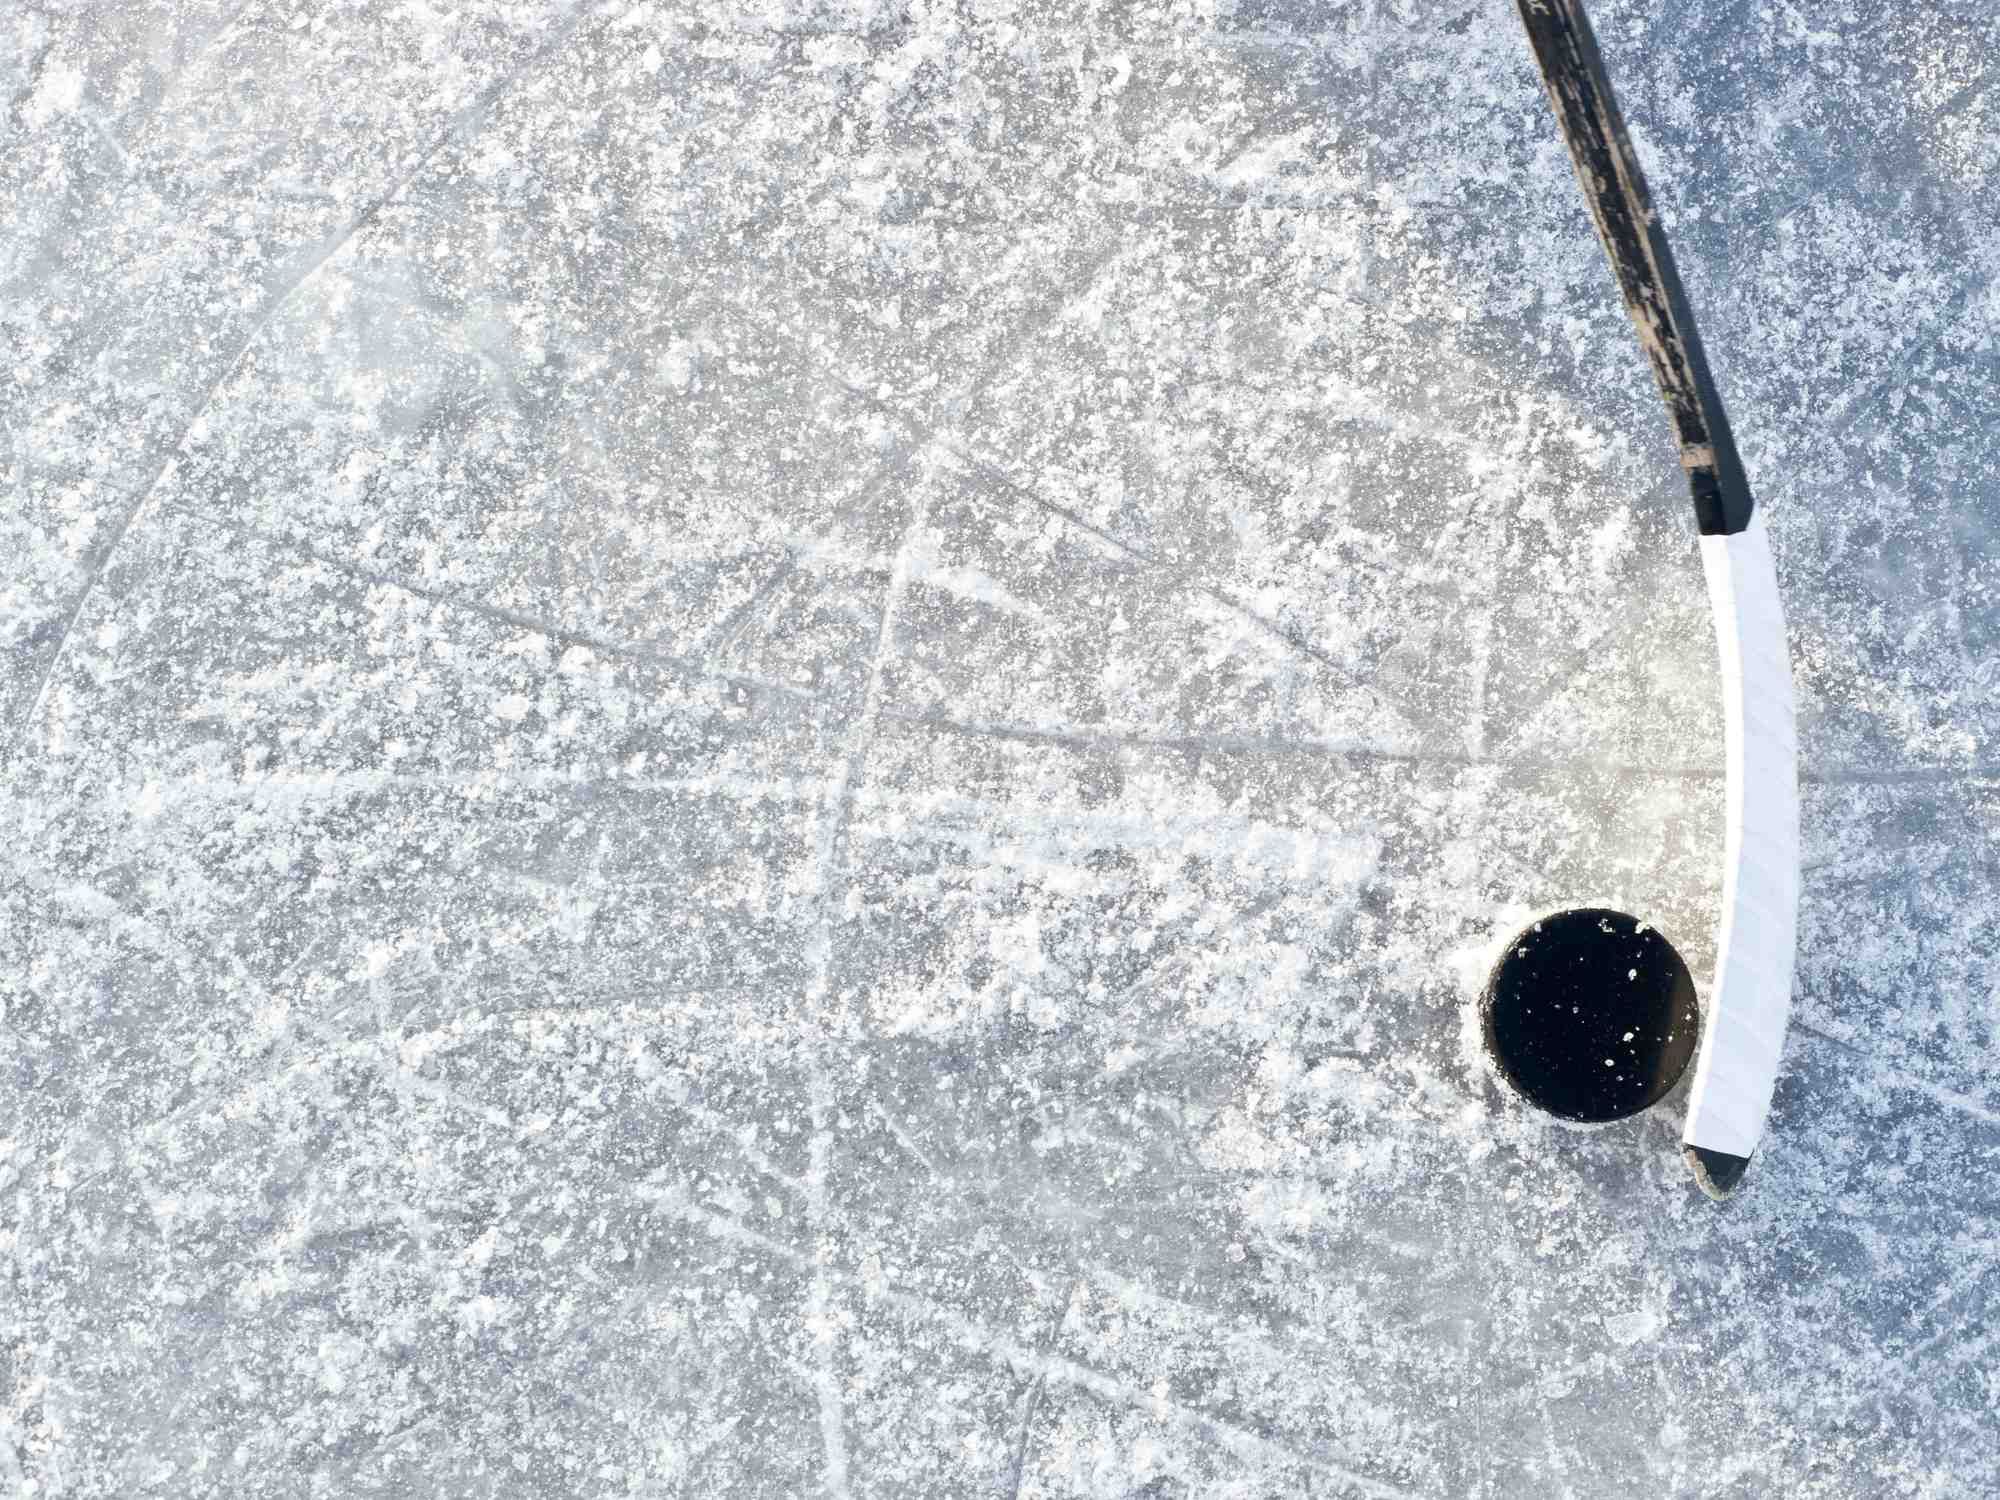 Hockey puck on ice regarding the junior hockey league class action settlement being on thin ice